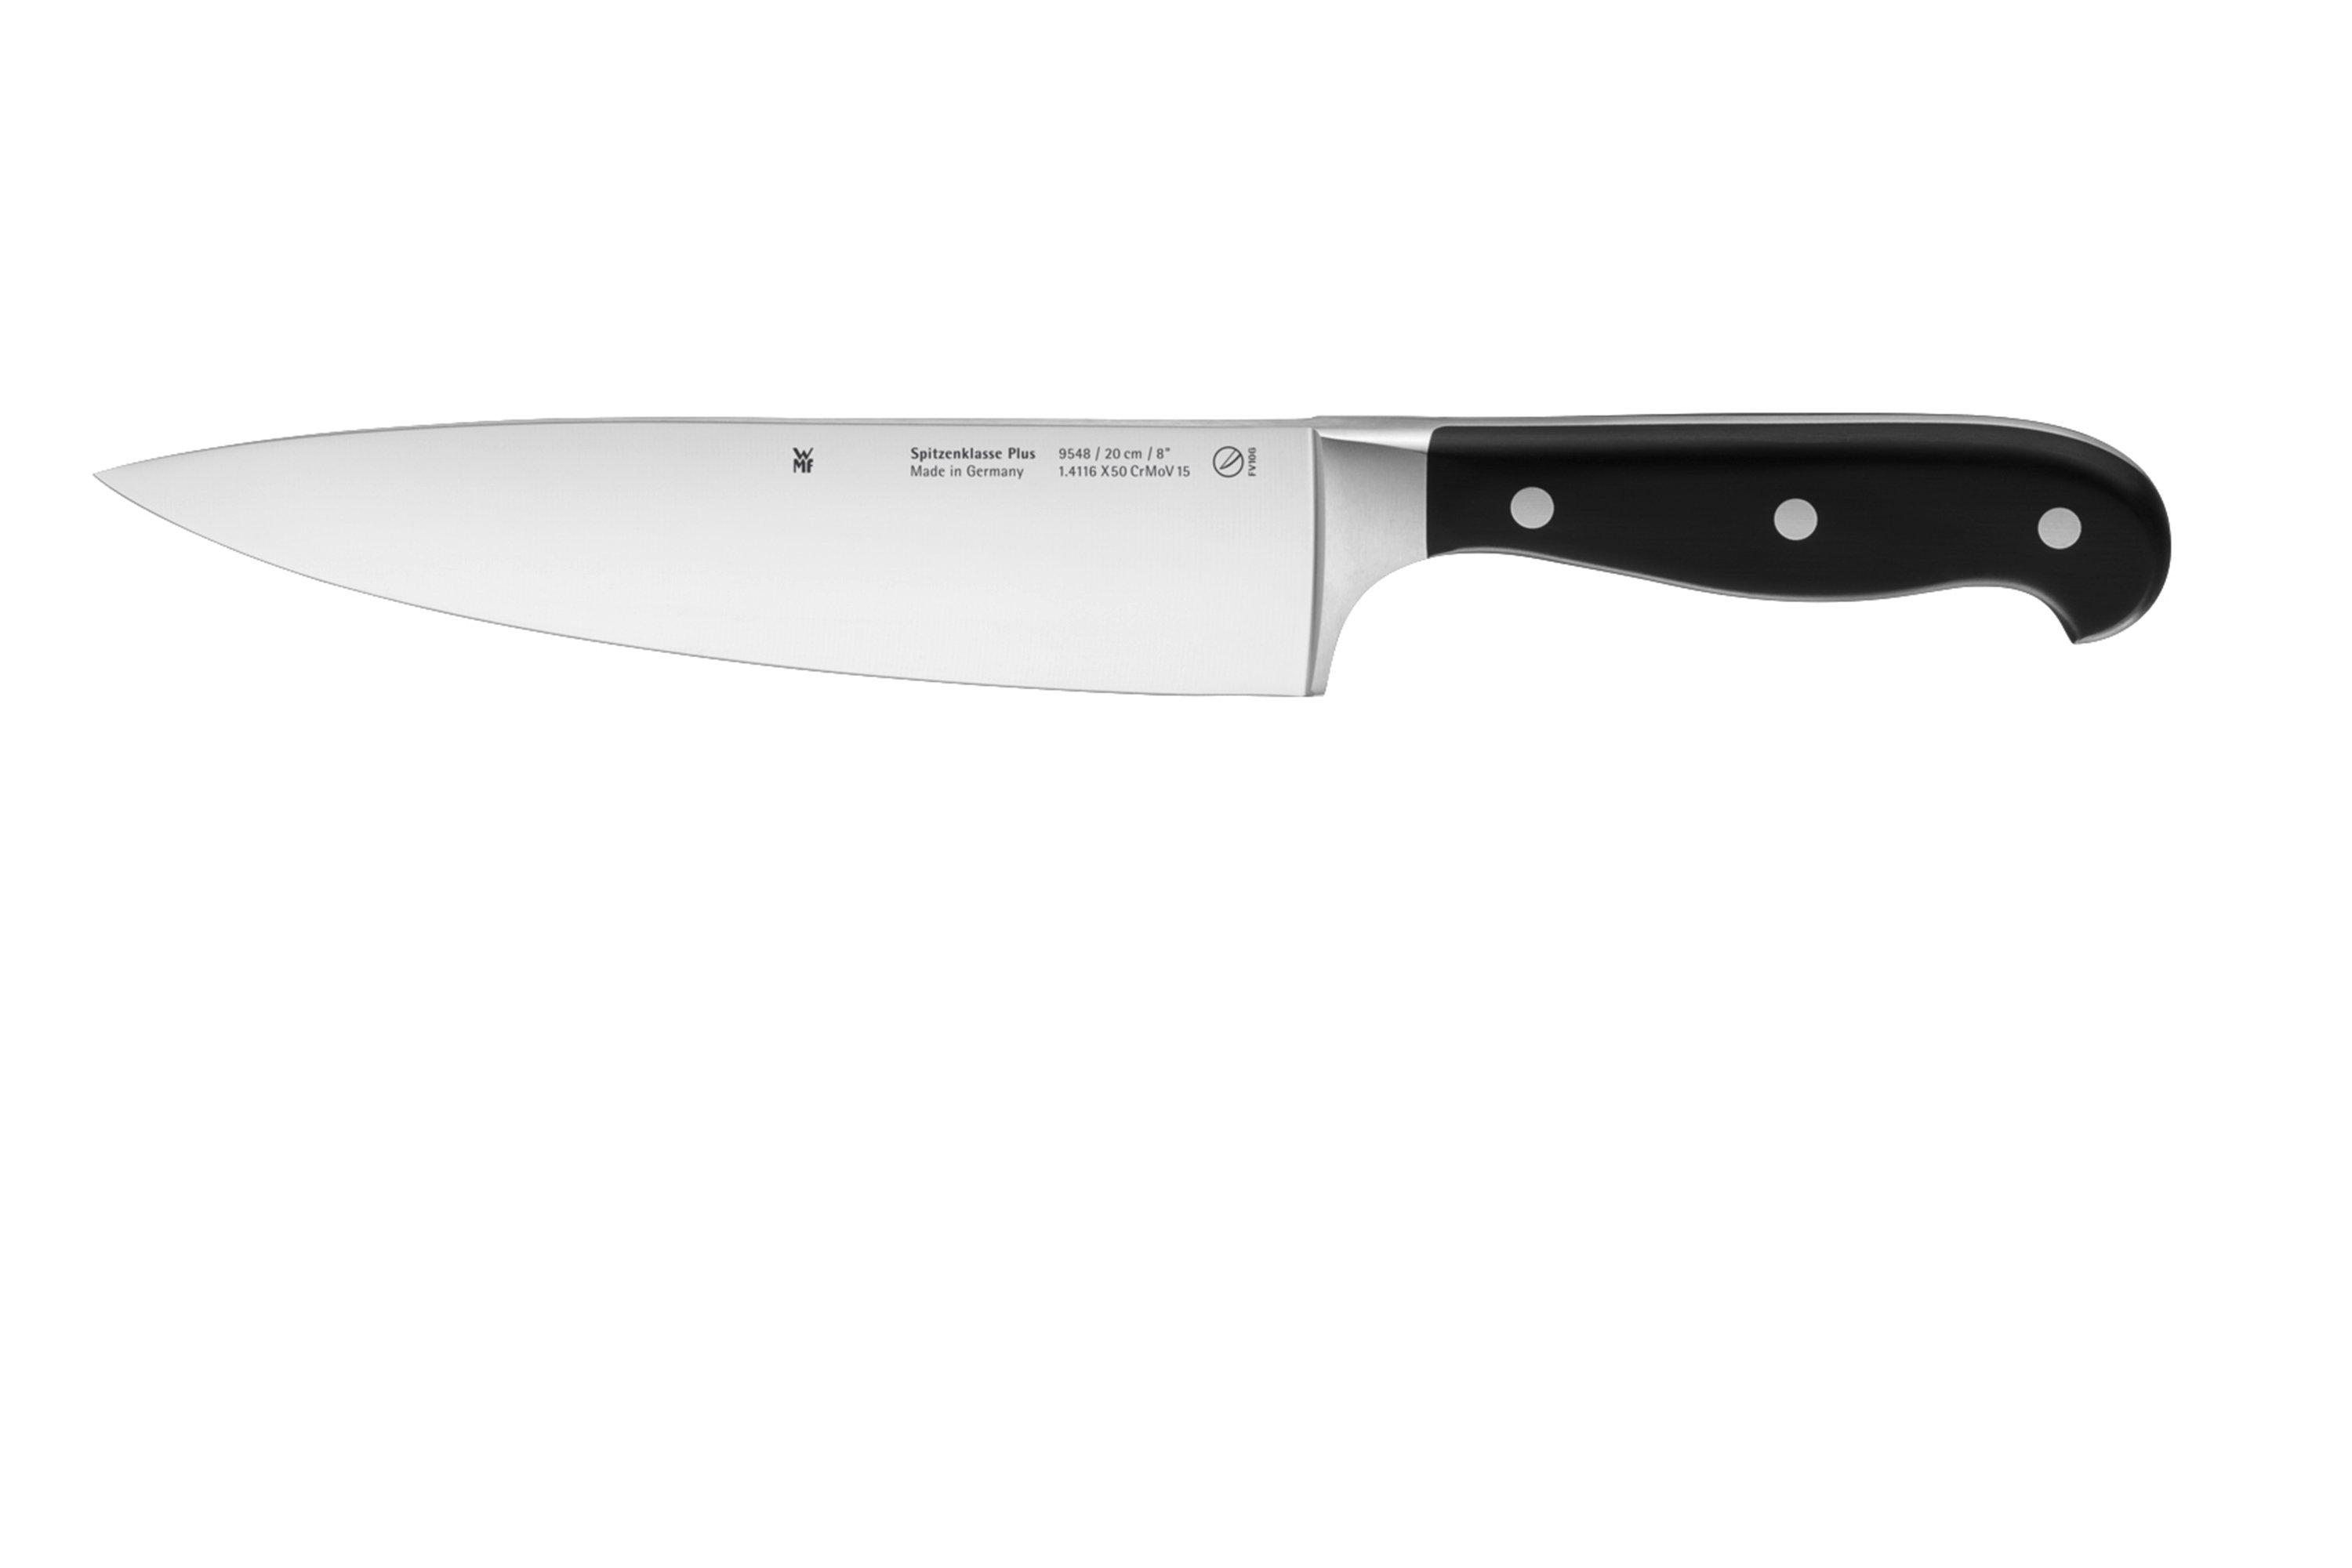 WMF Spitzenklasse Plus 1894919992, 3-piece Advantageously | knife set shopping at